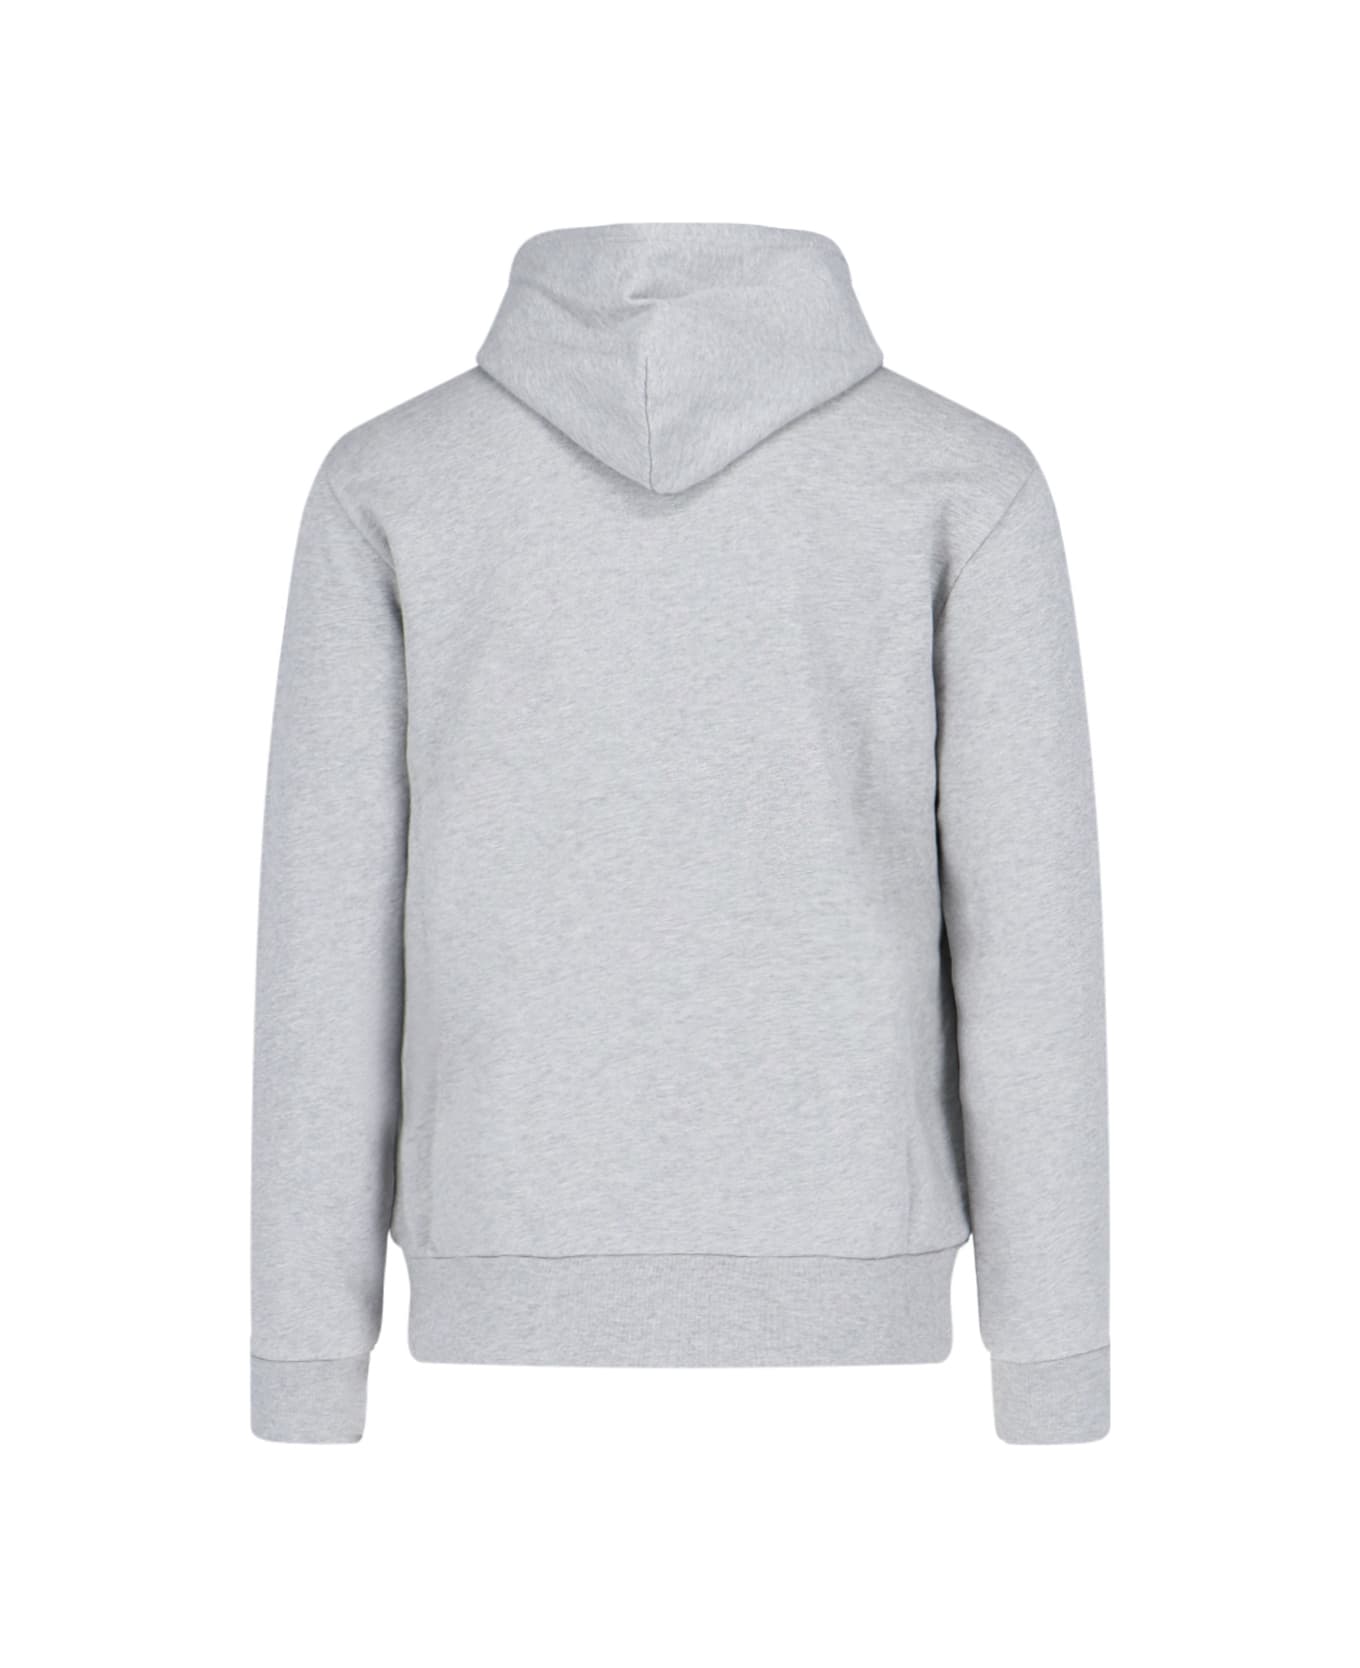 Polo Ralph Lauren 'rigby Go' Logo Sweatshirt - Spring heather